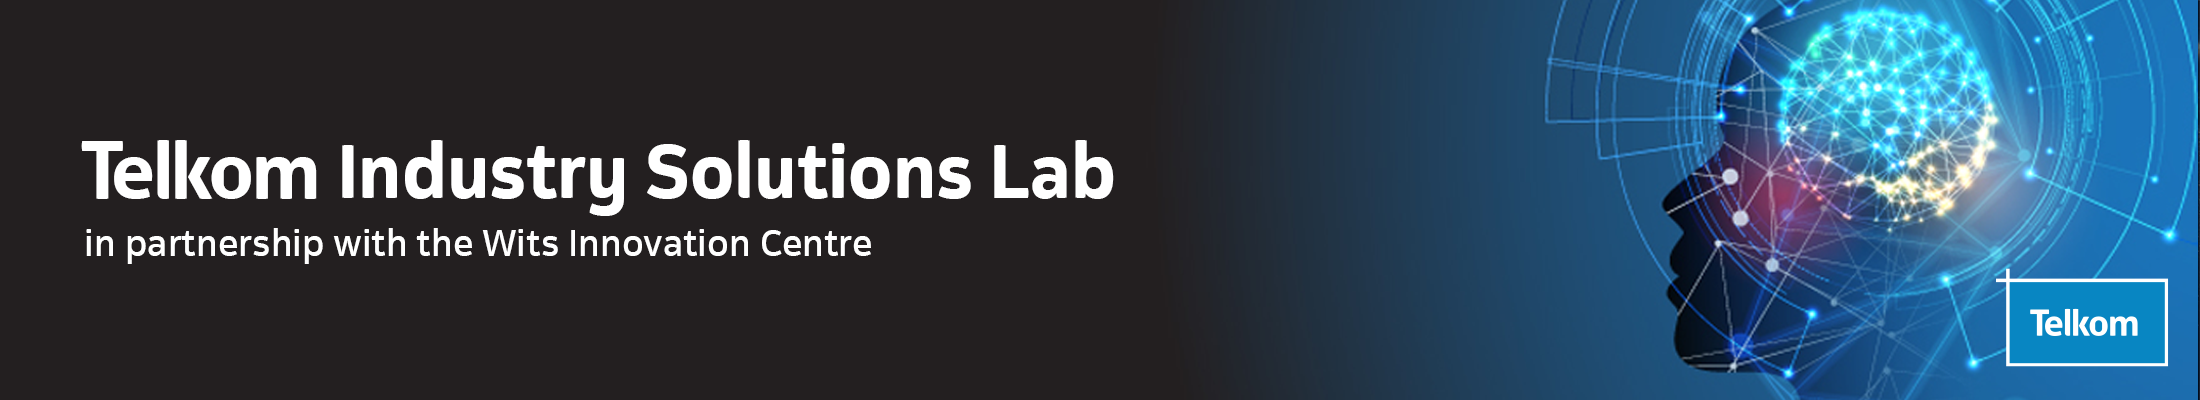 Telkom Industry Solutions Lab